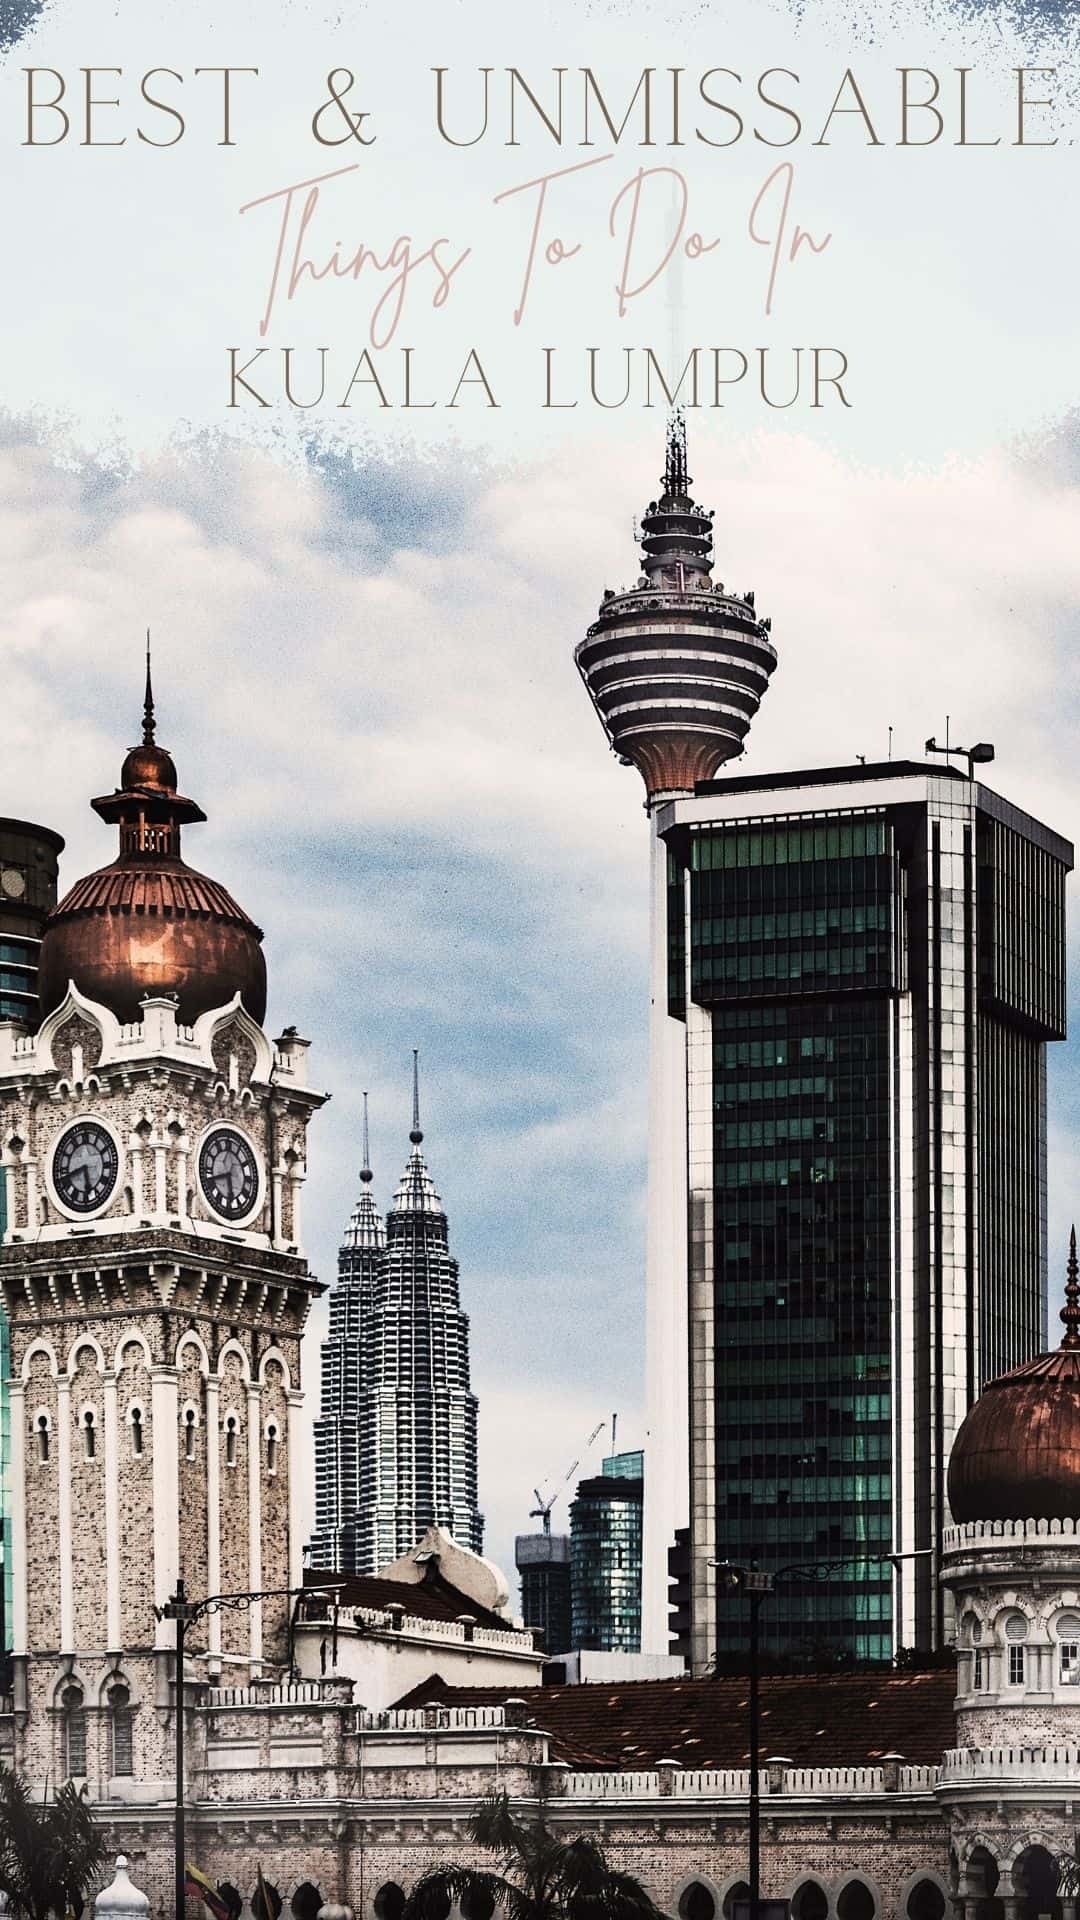 Menara Tower, Petronas Towers, Kuala Lumpur City view